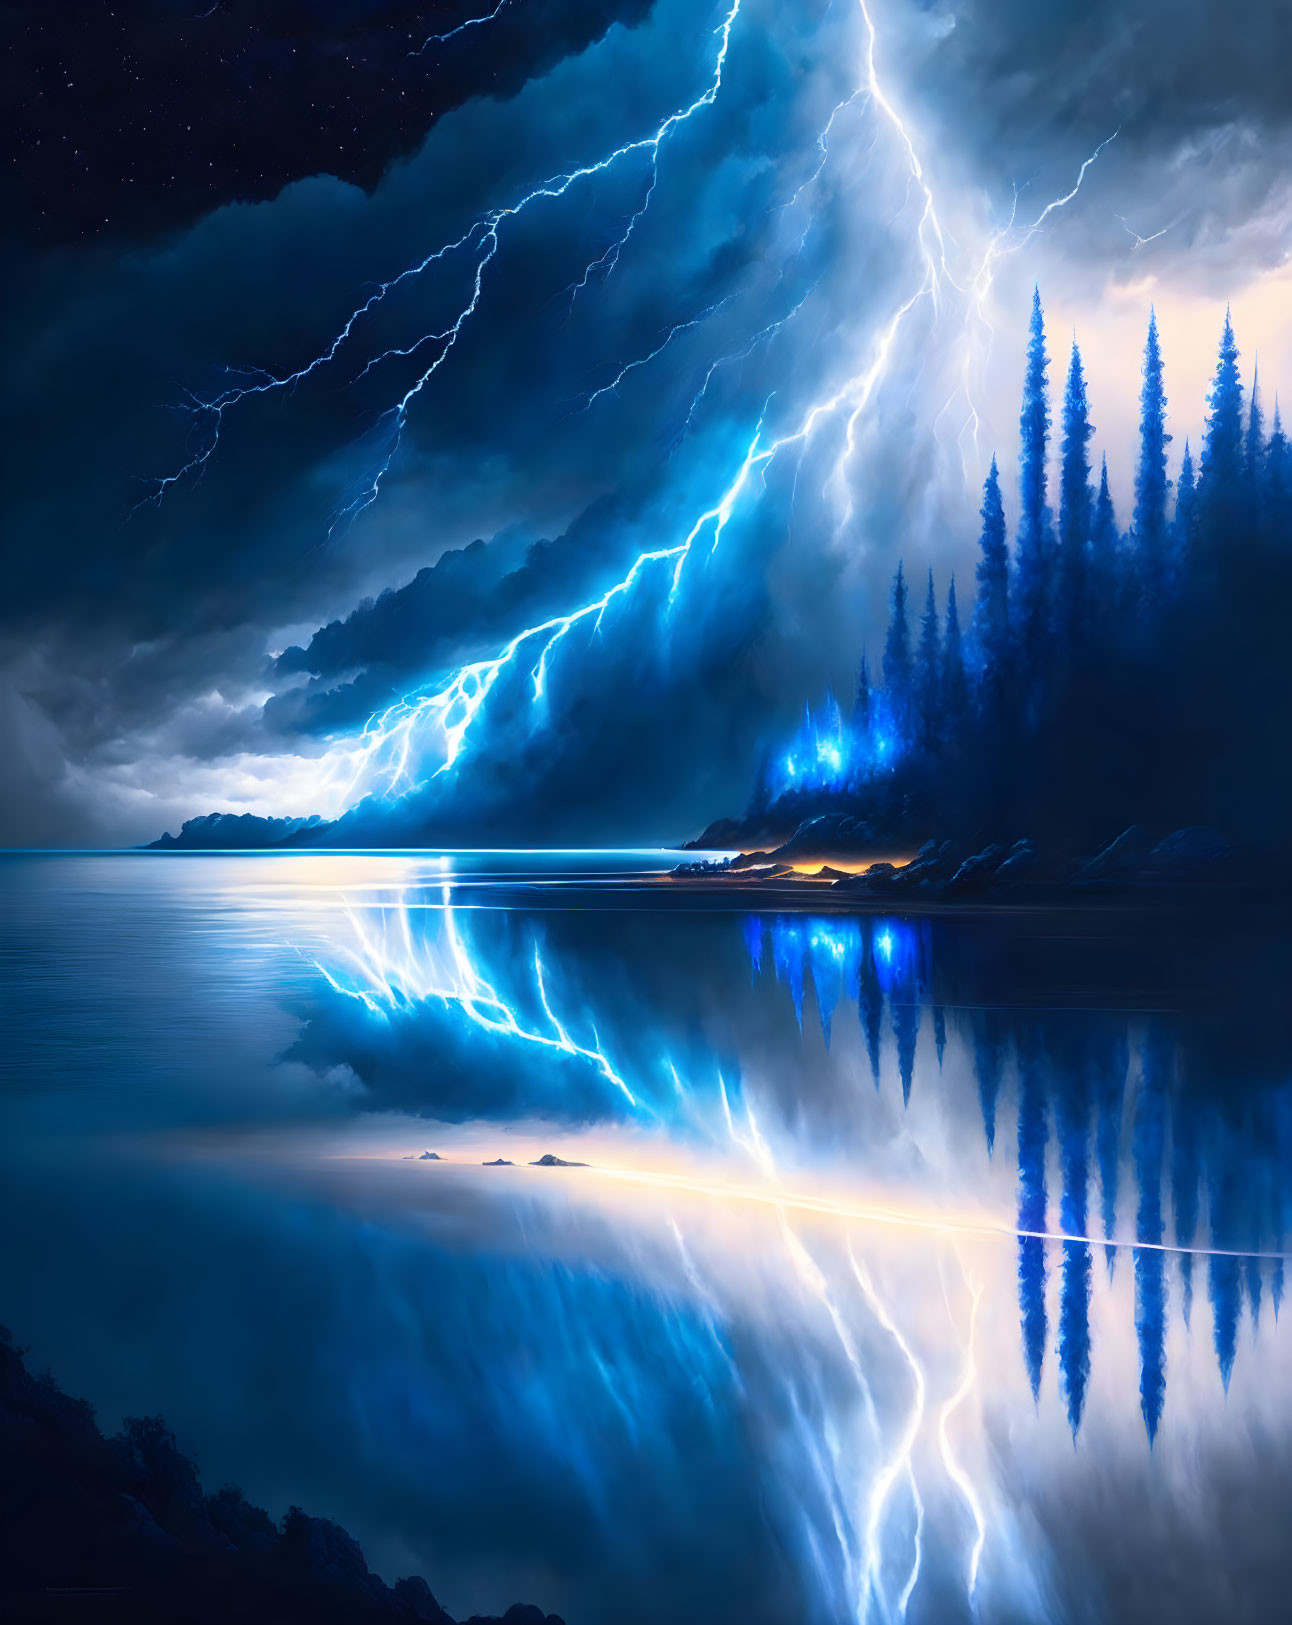 Lightning over calm sea 